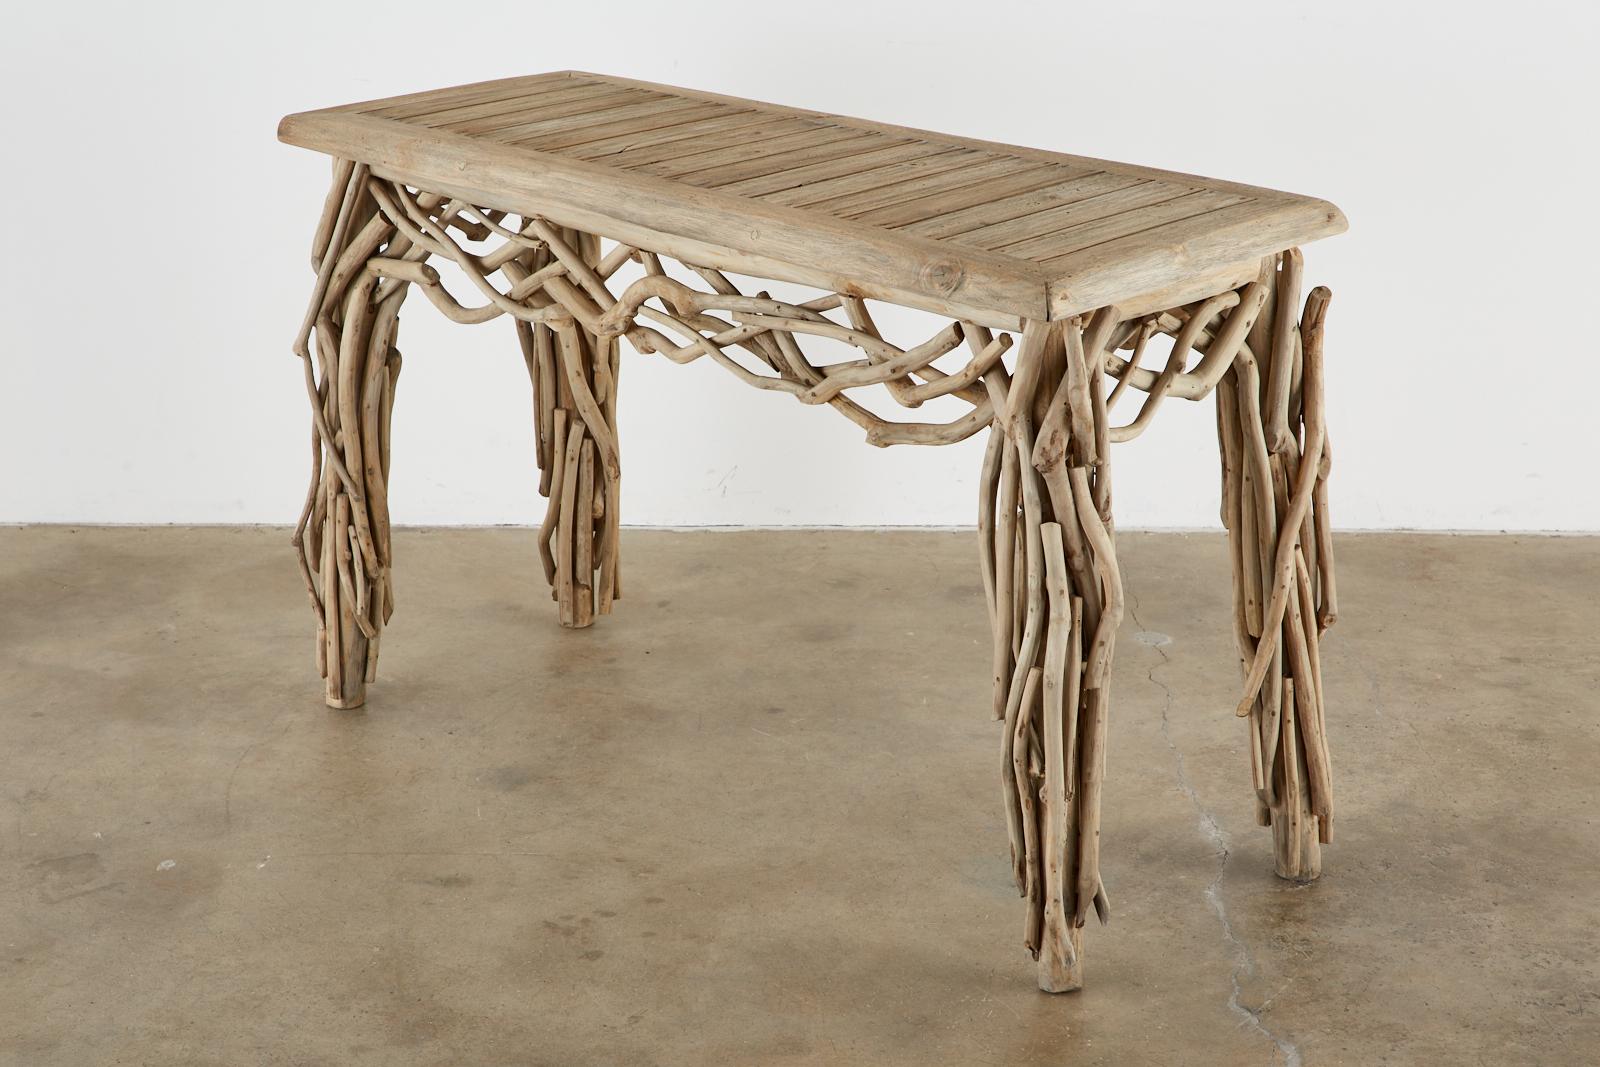 American Organic Modern Teak Driftwood Console Sofa Table For Sale